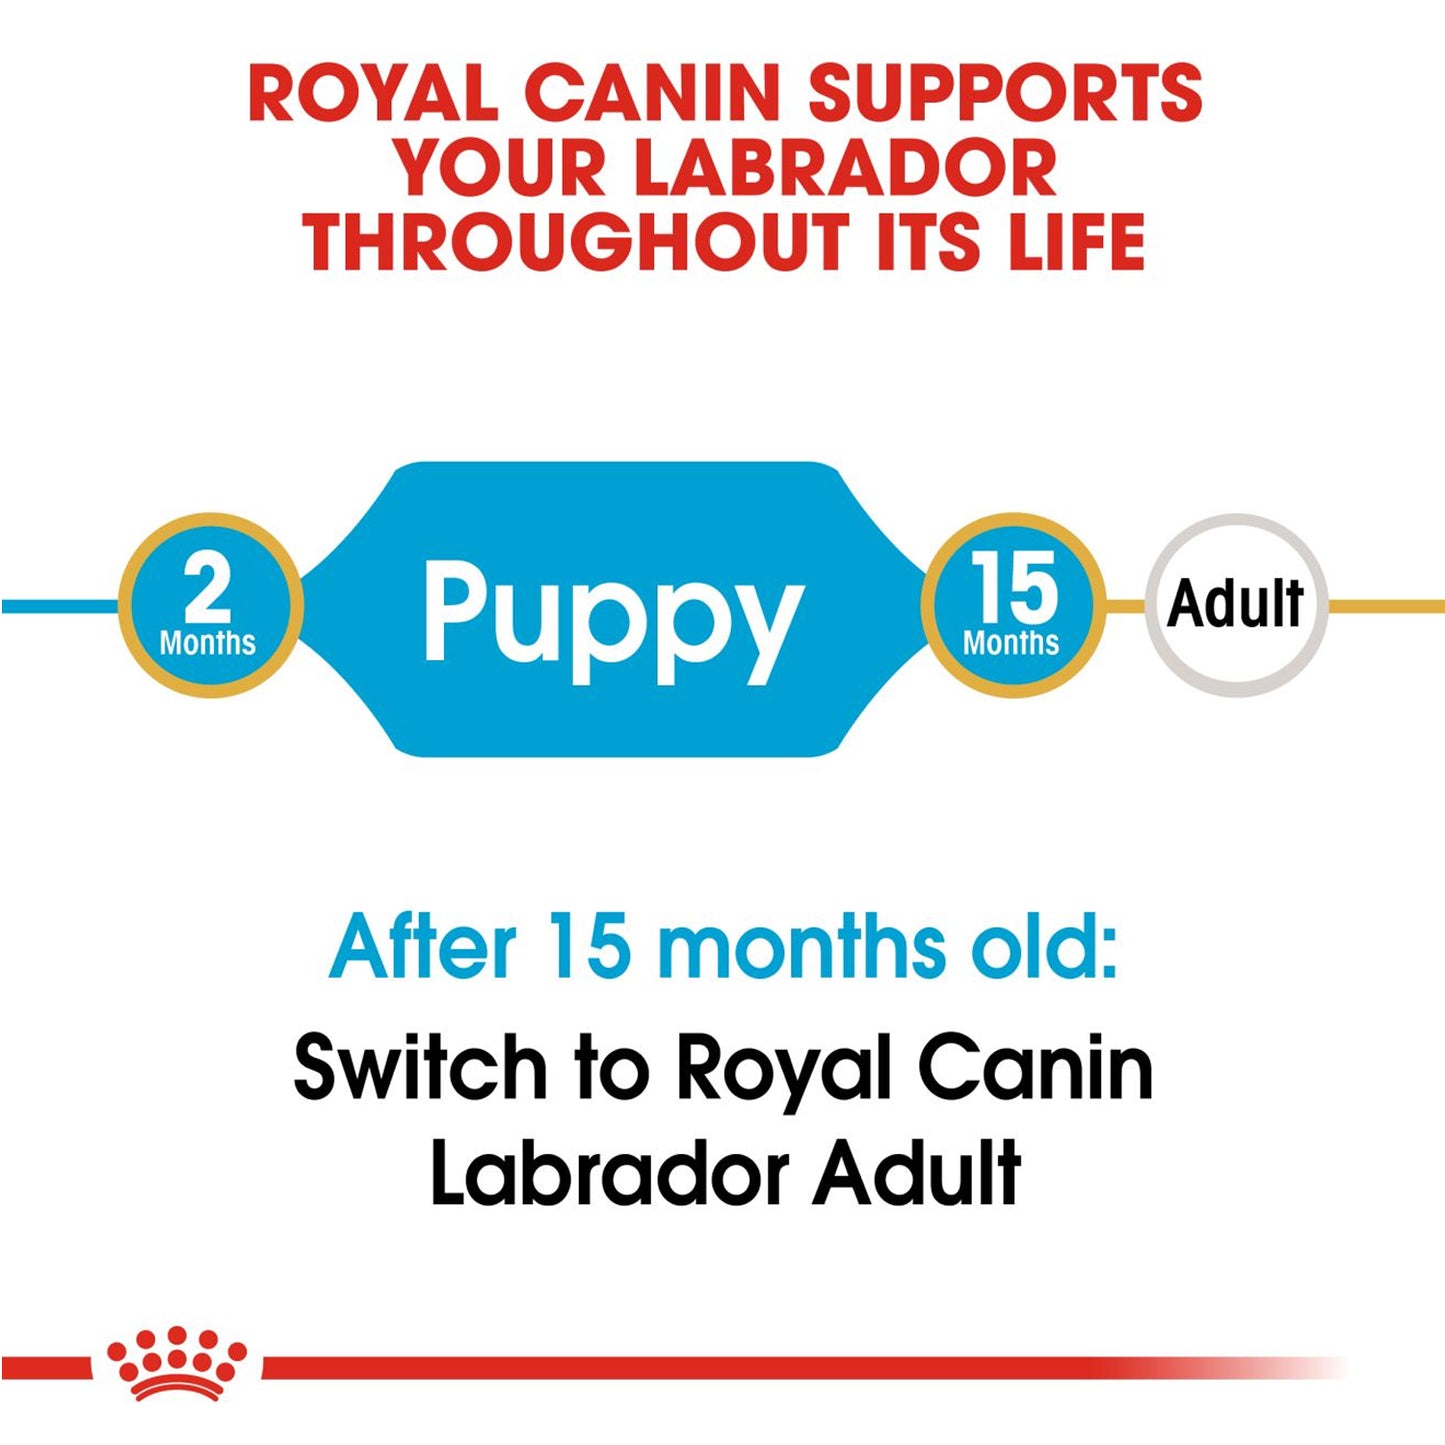 Royal Canin - Labrador Retriever Puppy